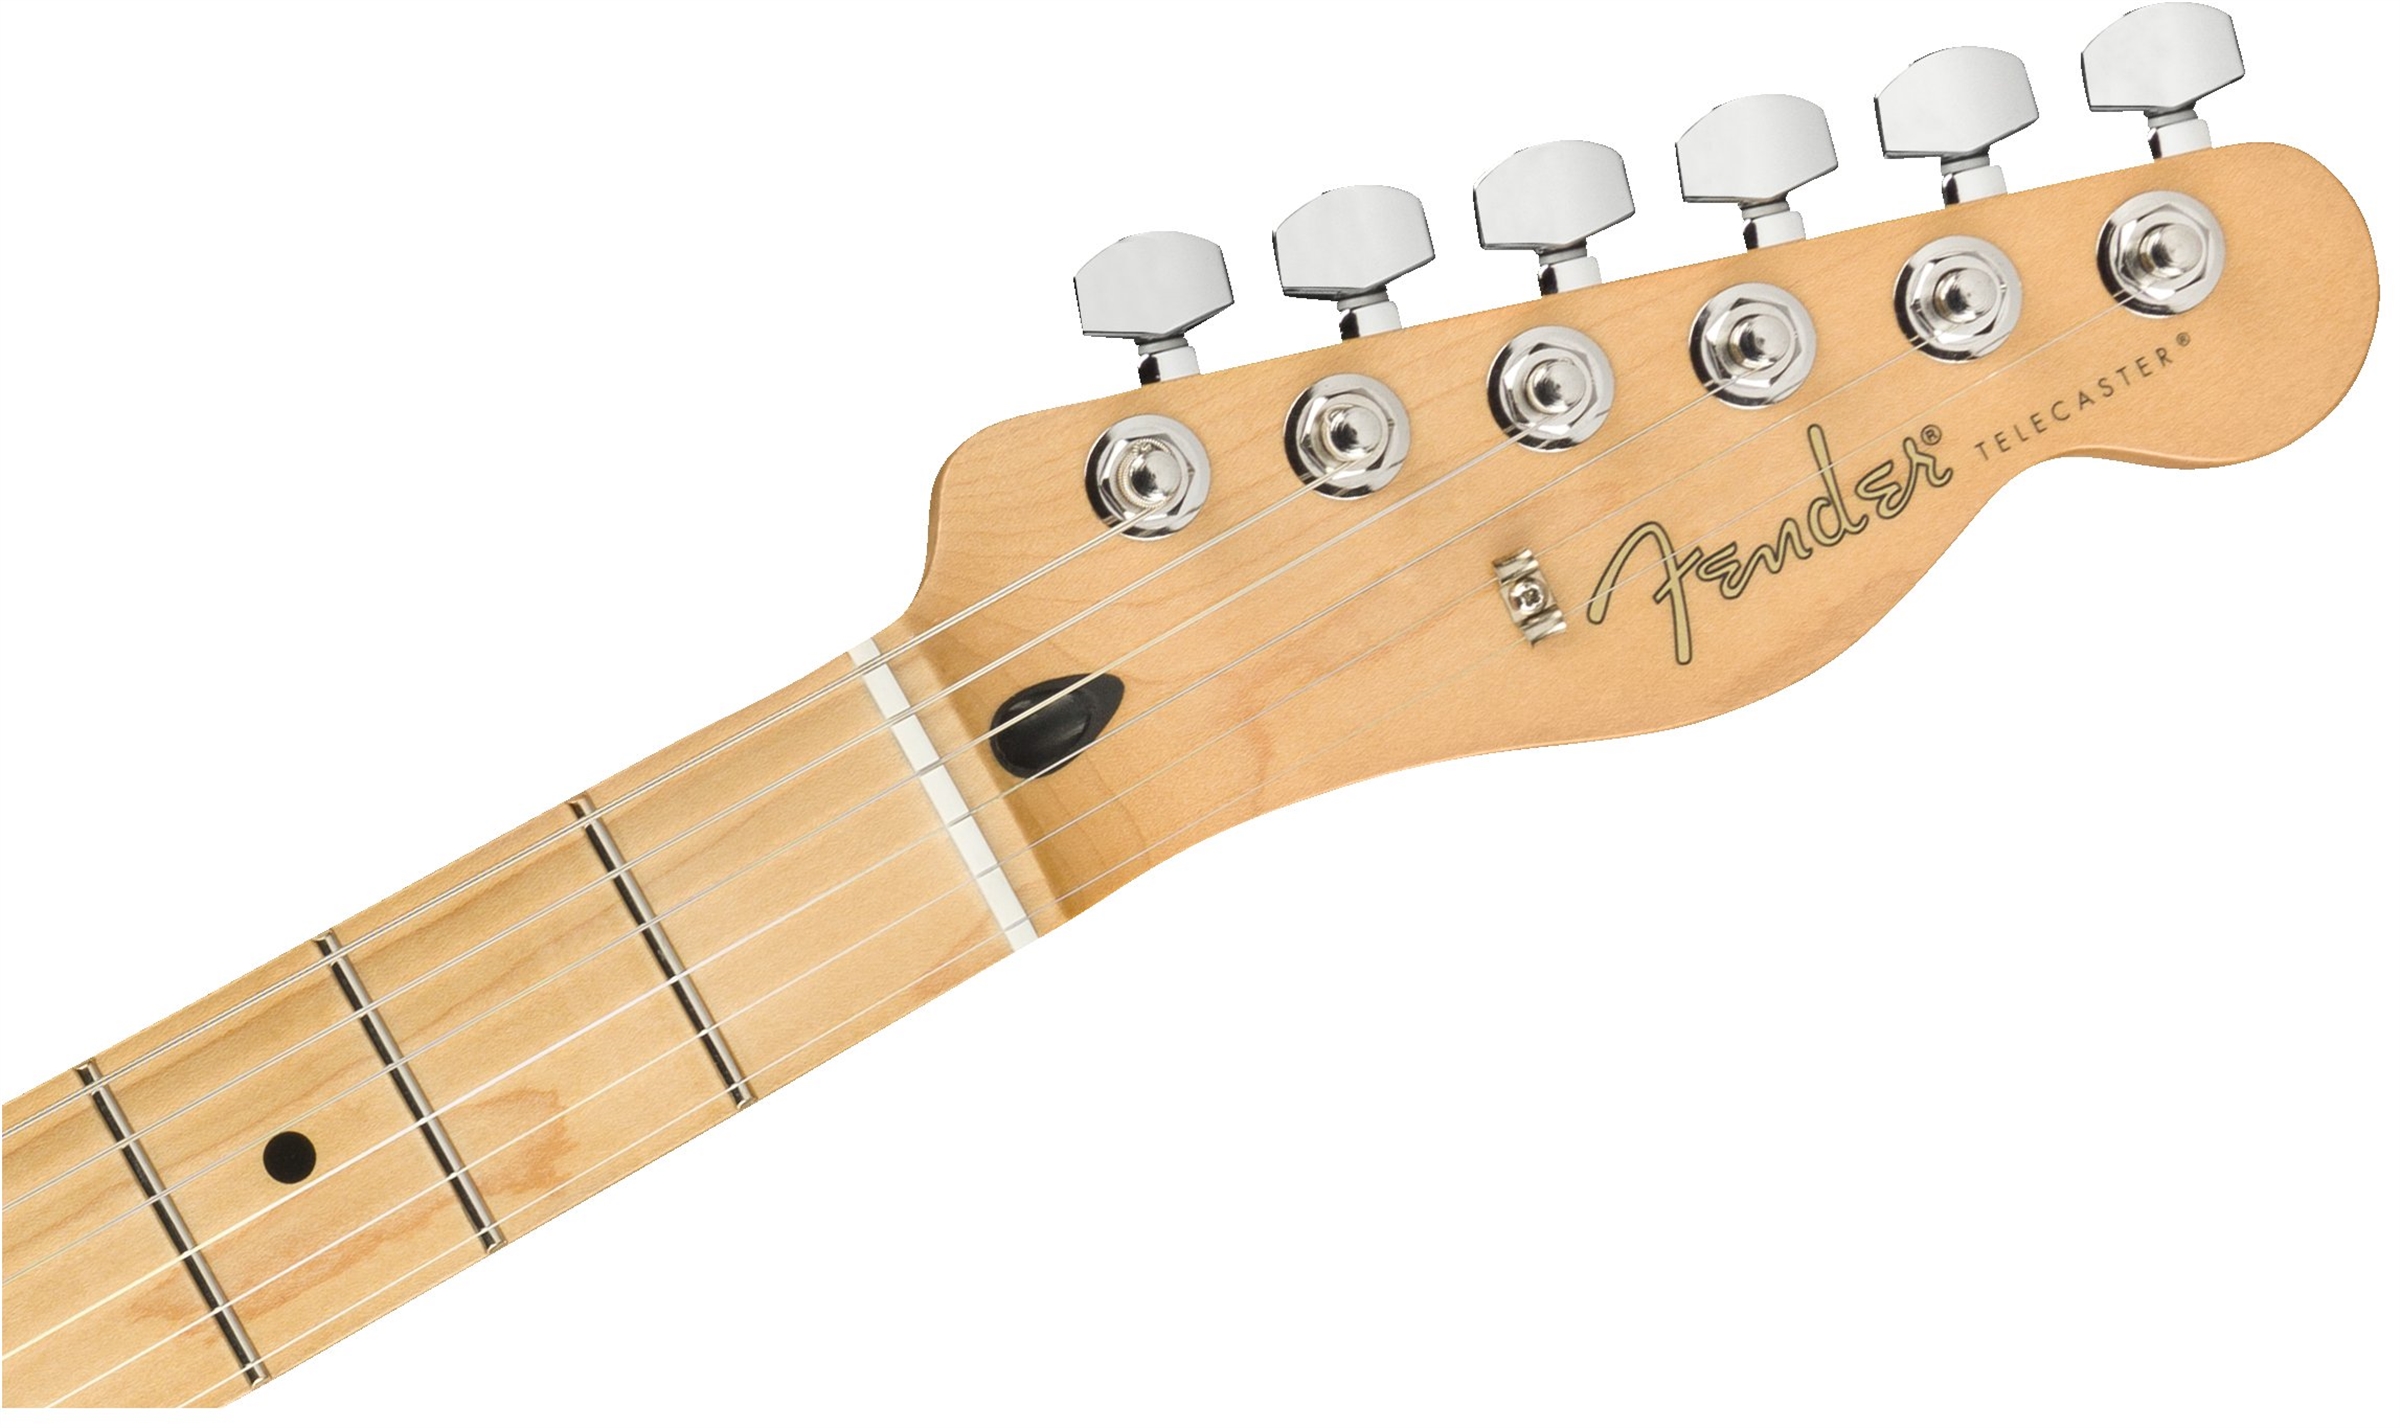 Fender Player Telecaster®, Maple Fingerboard, Tidepool